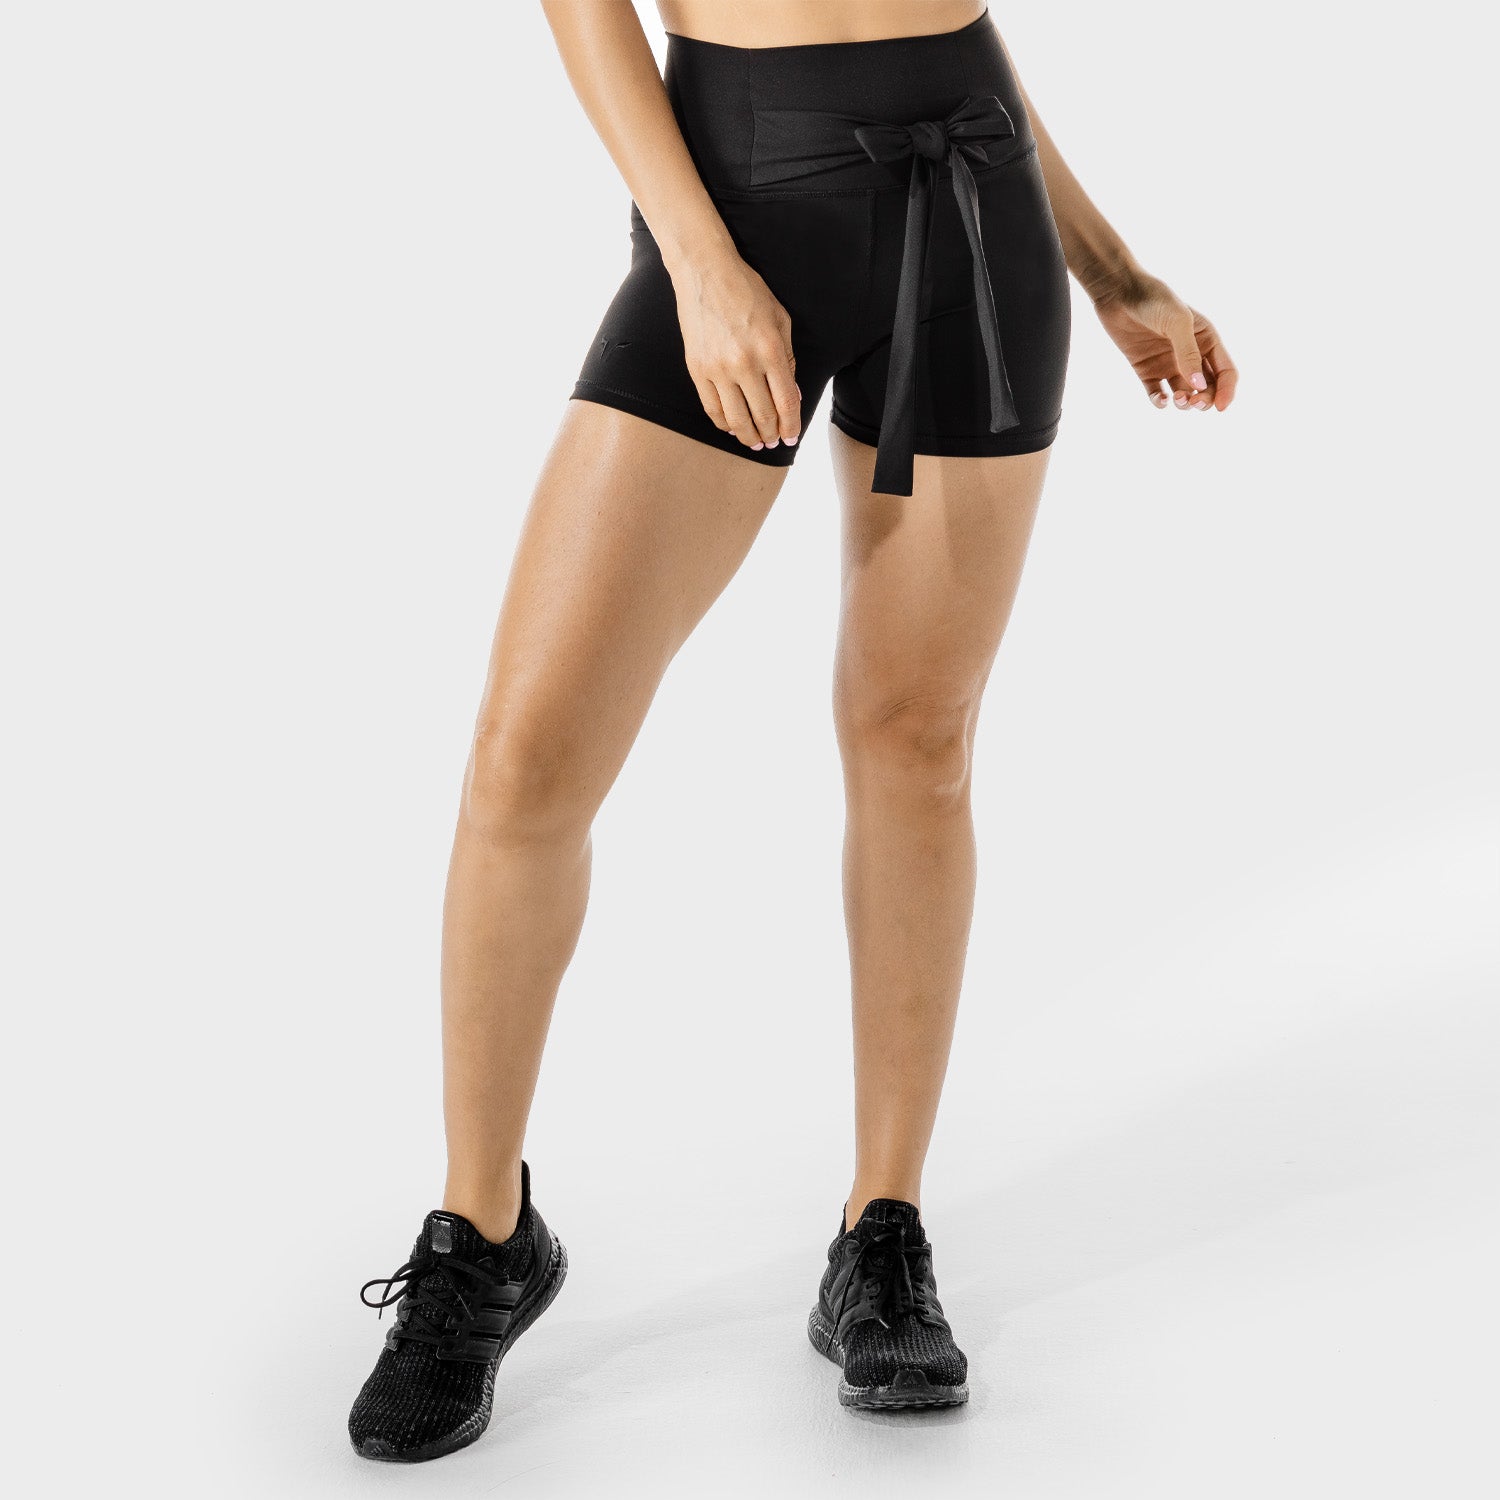 Buy the Lululemon Women's Black Activewear Running/Jogging Shorts